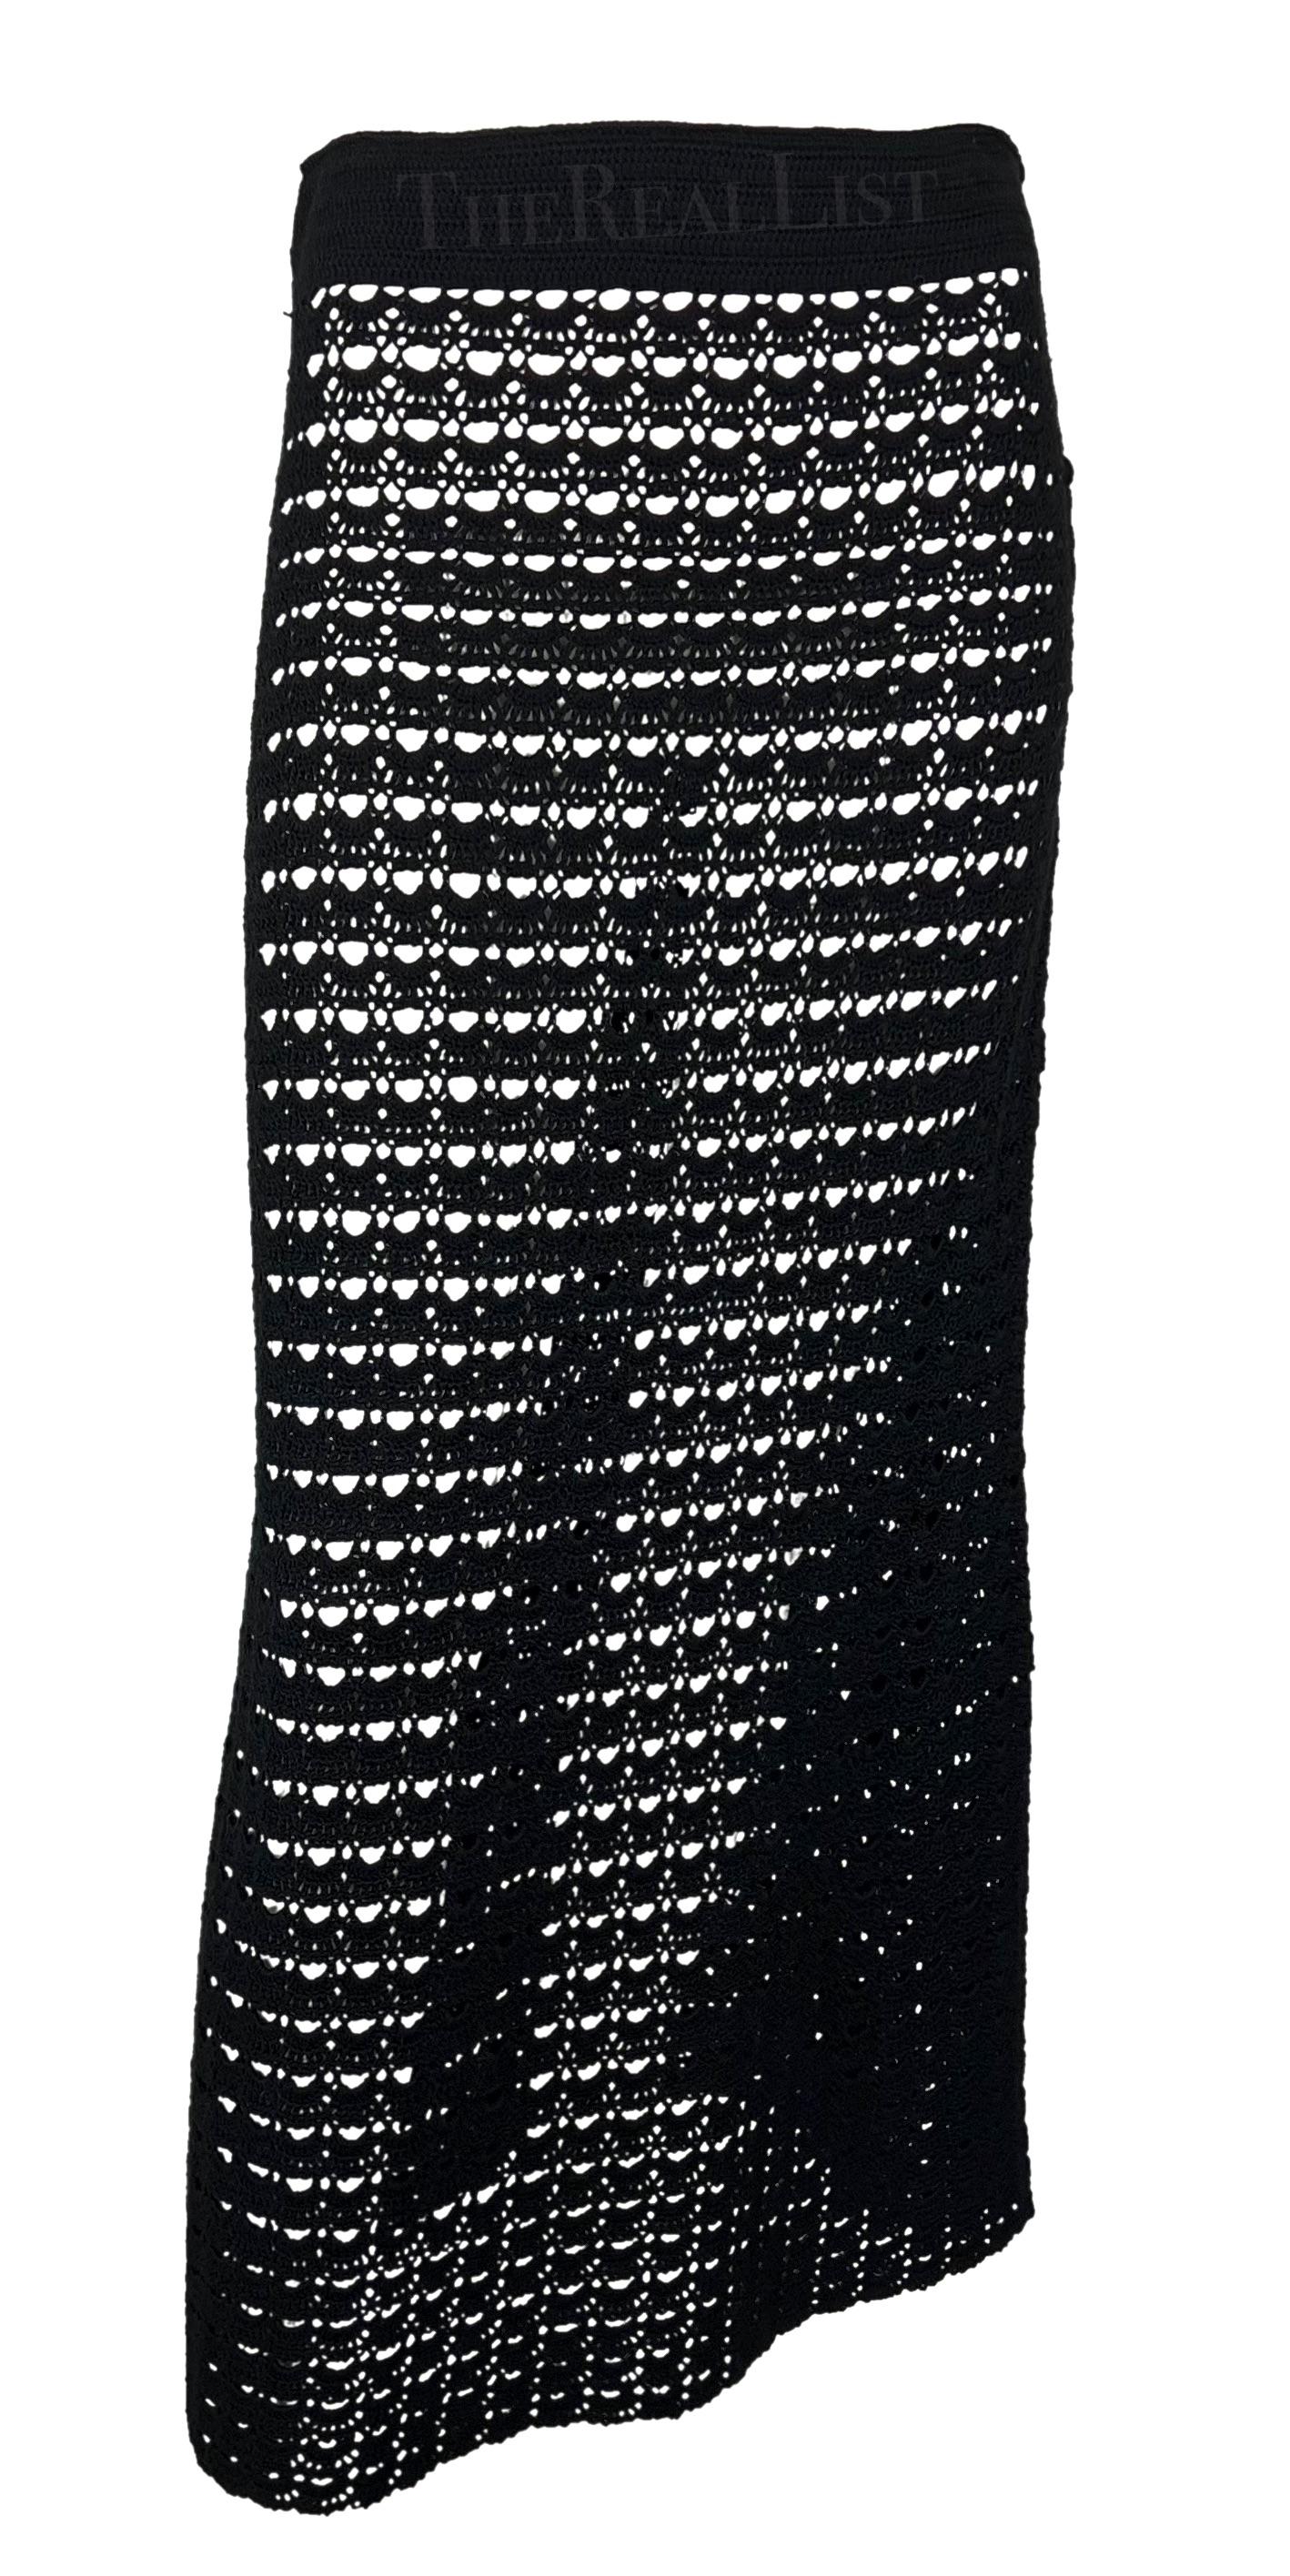 S/S 1997 Dolce & Gabbana Black Knit Crochet Maxi Skirt Wrap Top Skirt Set For Sale 5